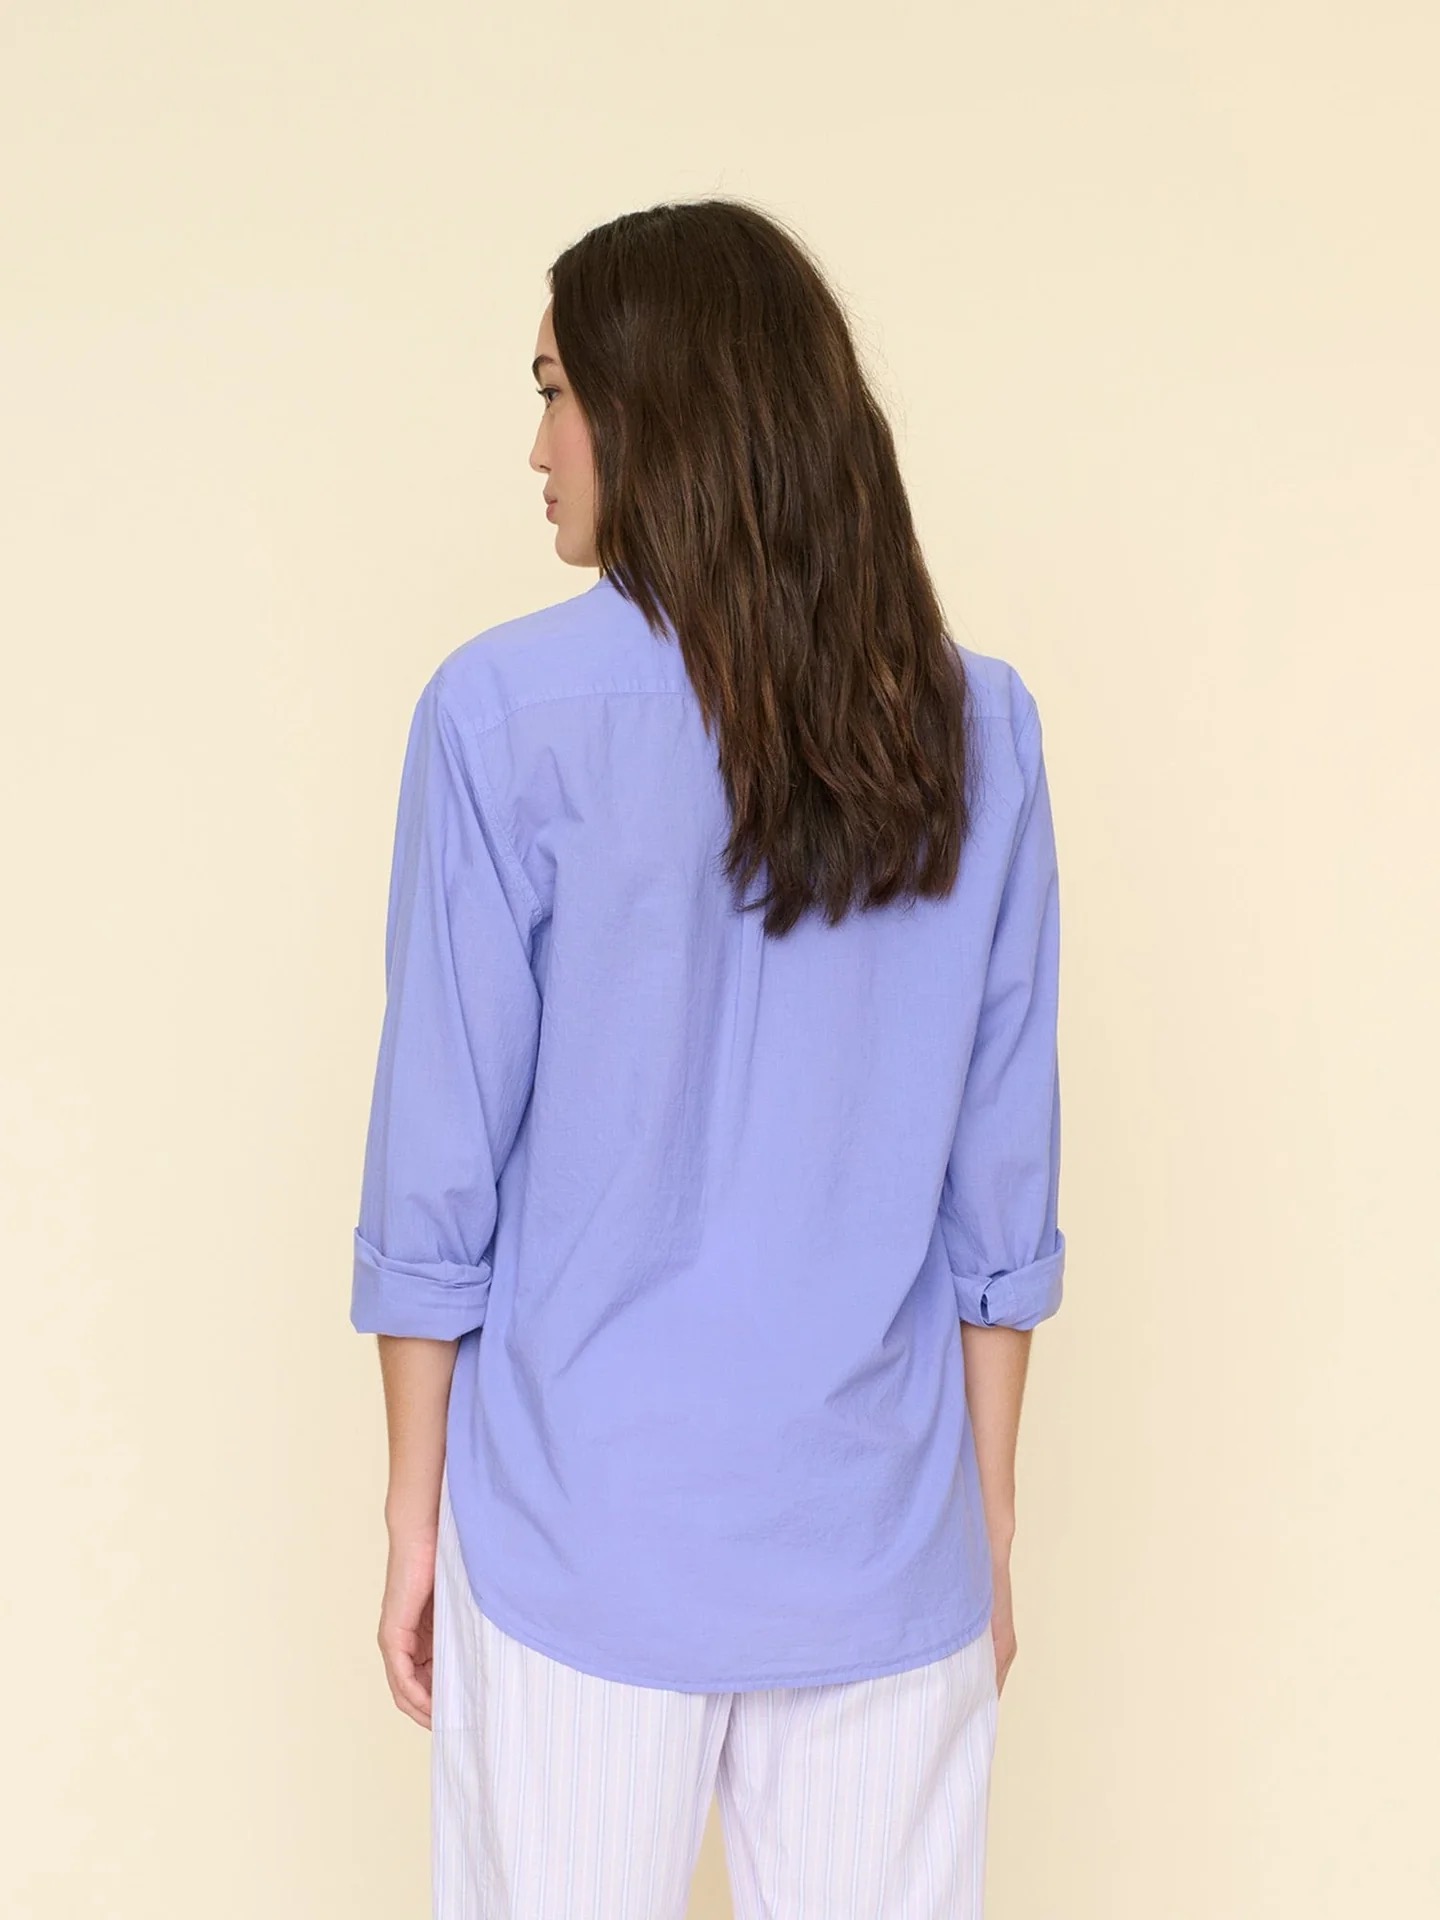 Bluse Beau in Dark Peri, XIRENA, Xirena shirt, X5CTP111